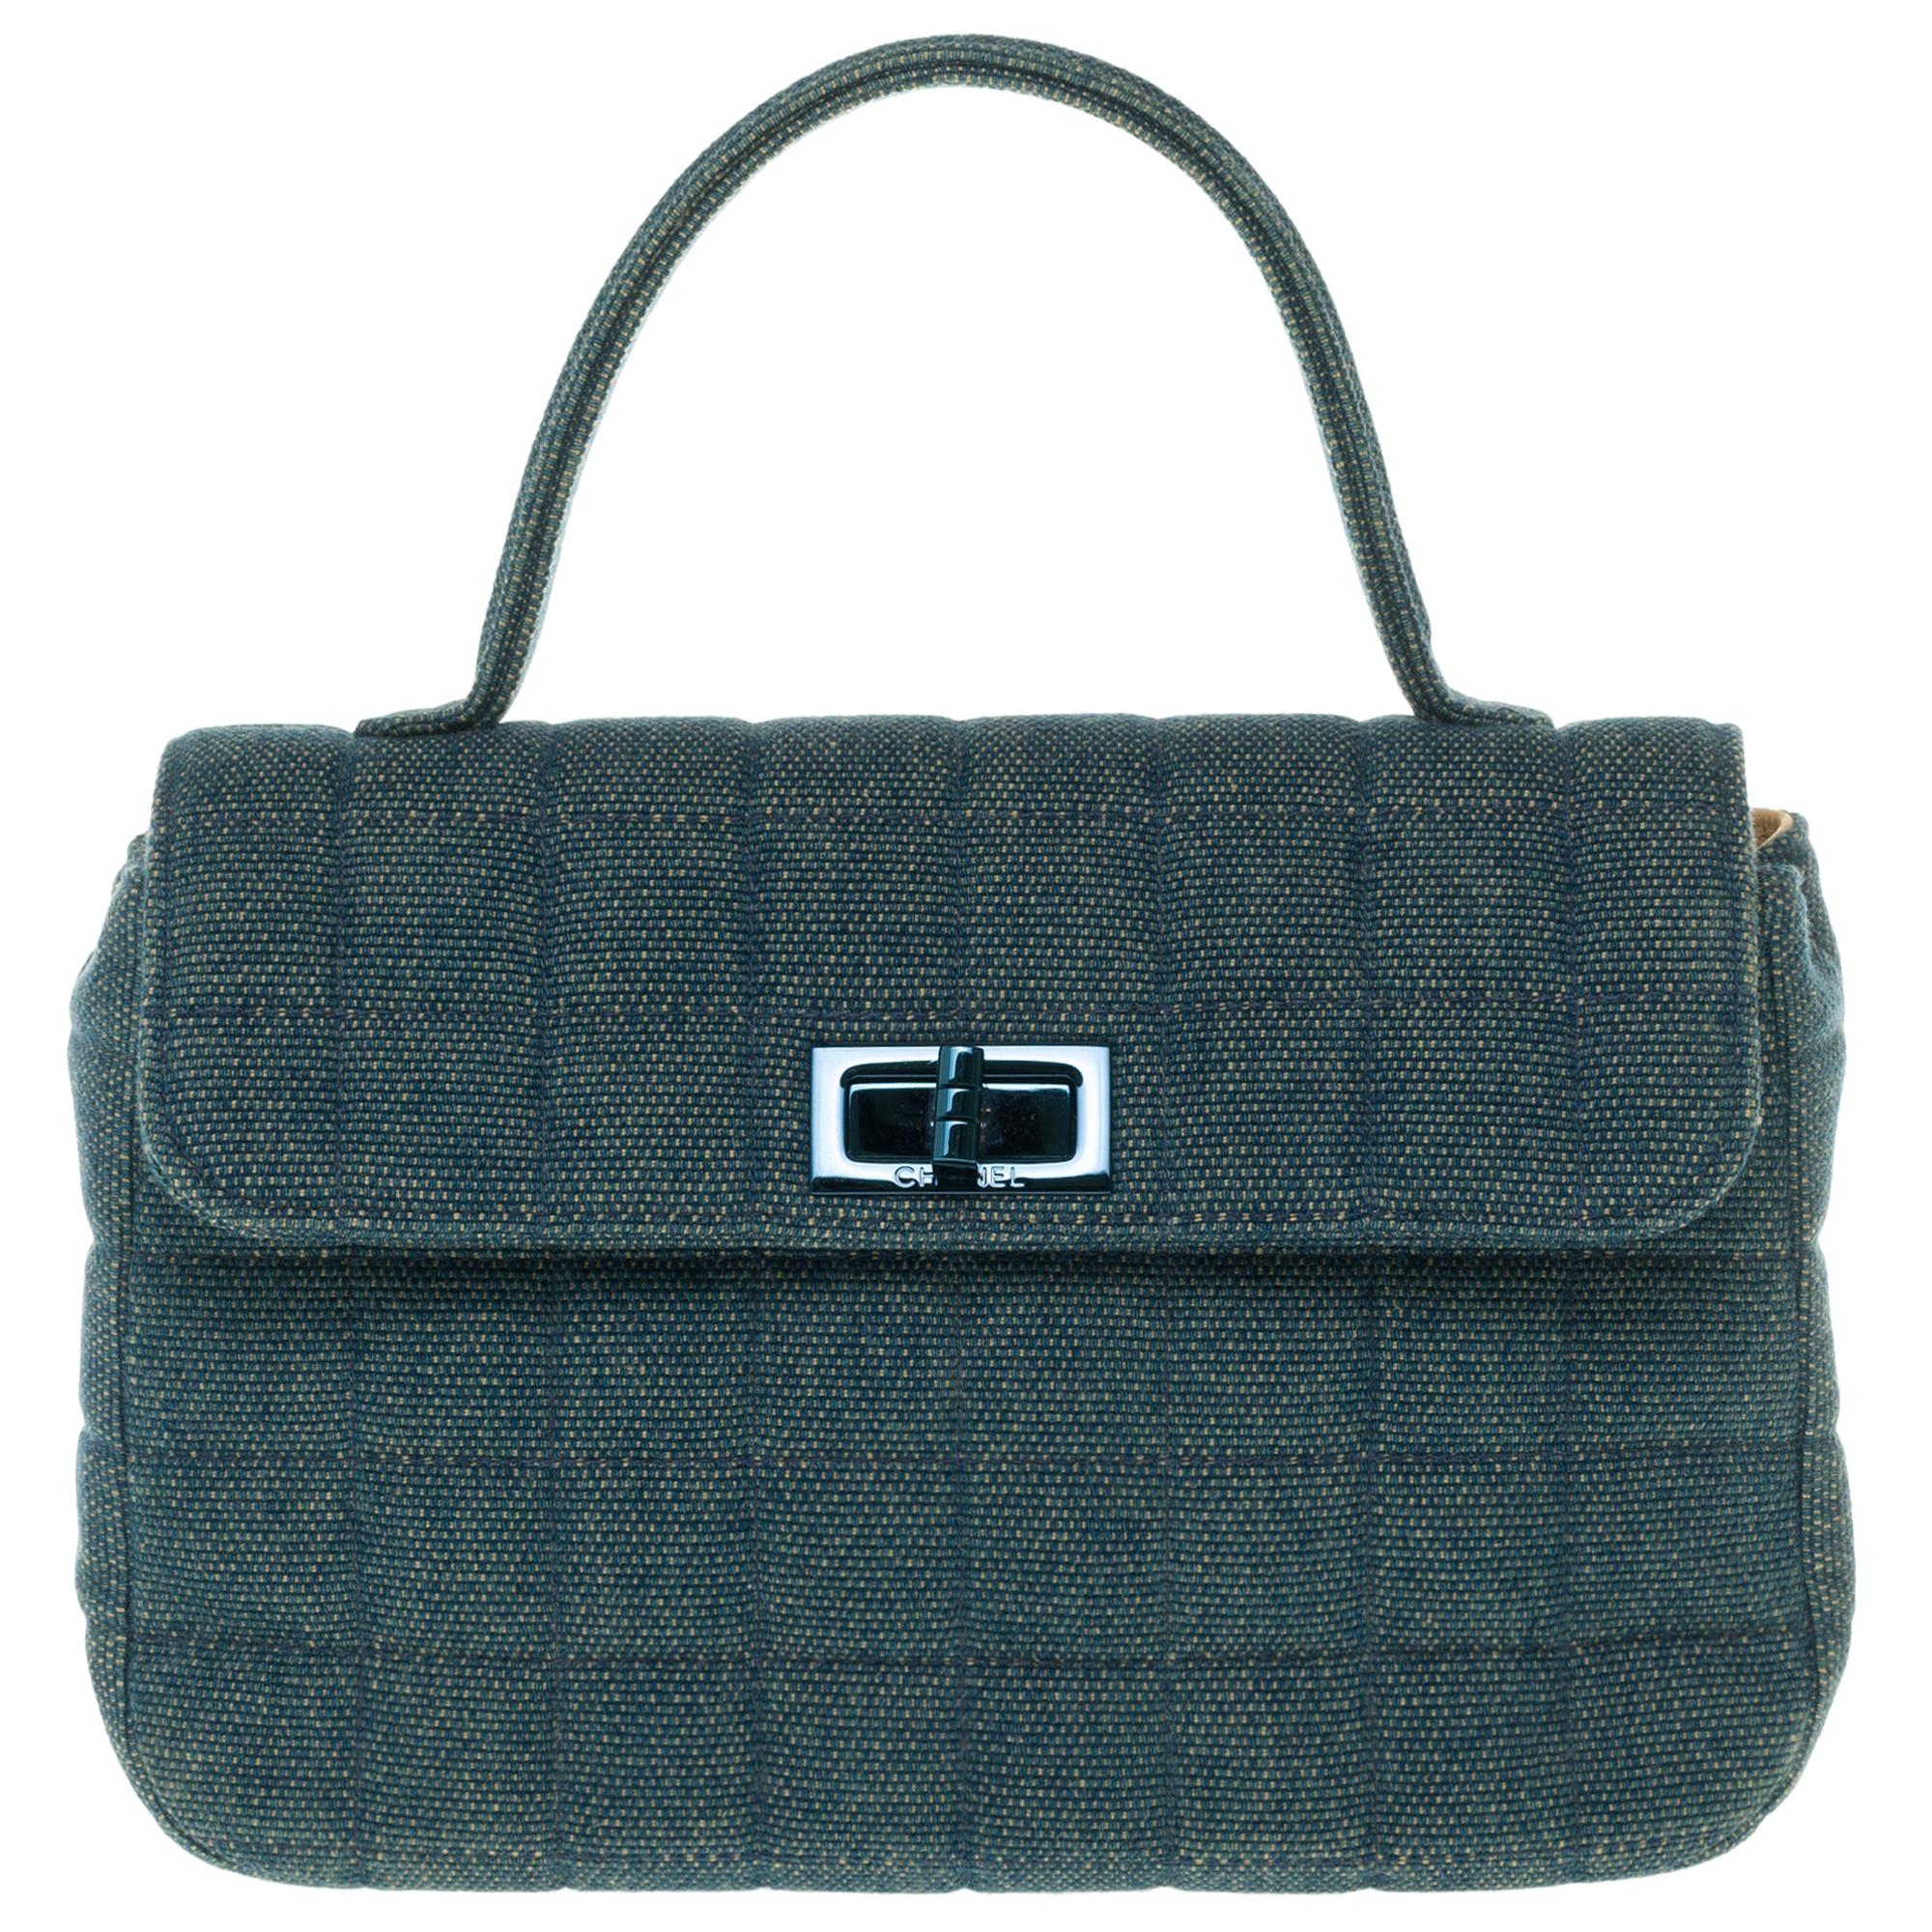 Amazing Chanel 2.55 handbag in blue denim